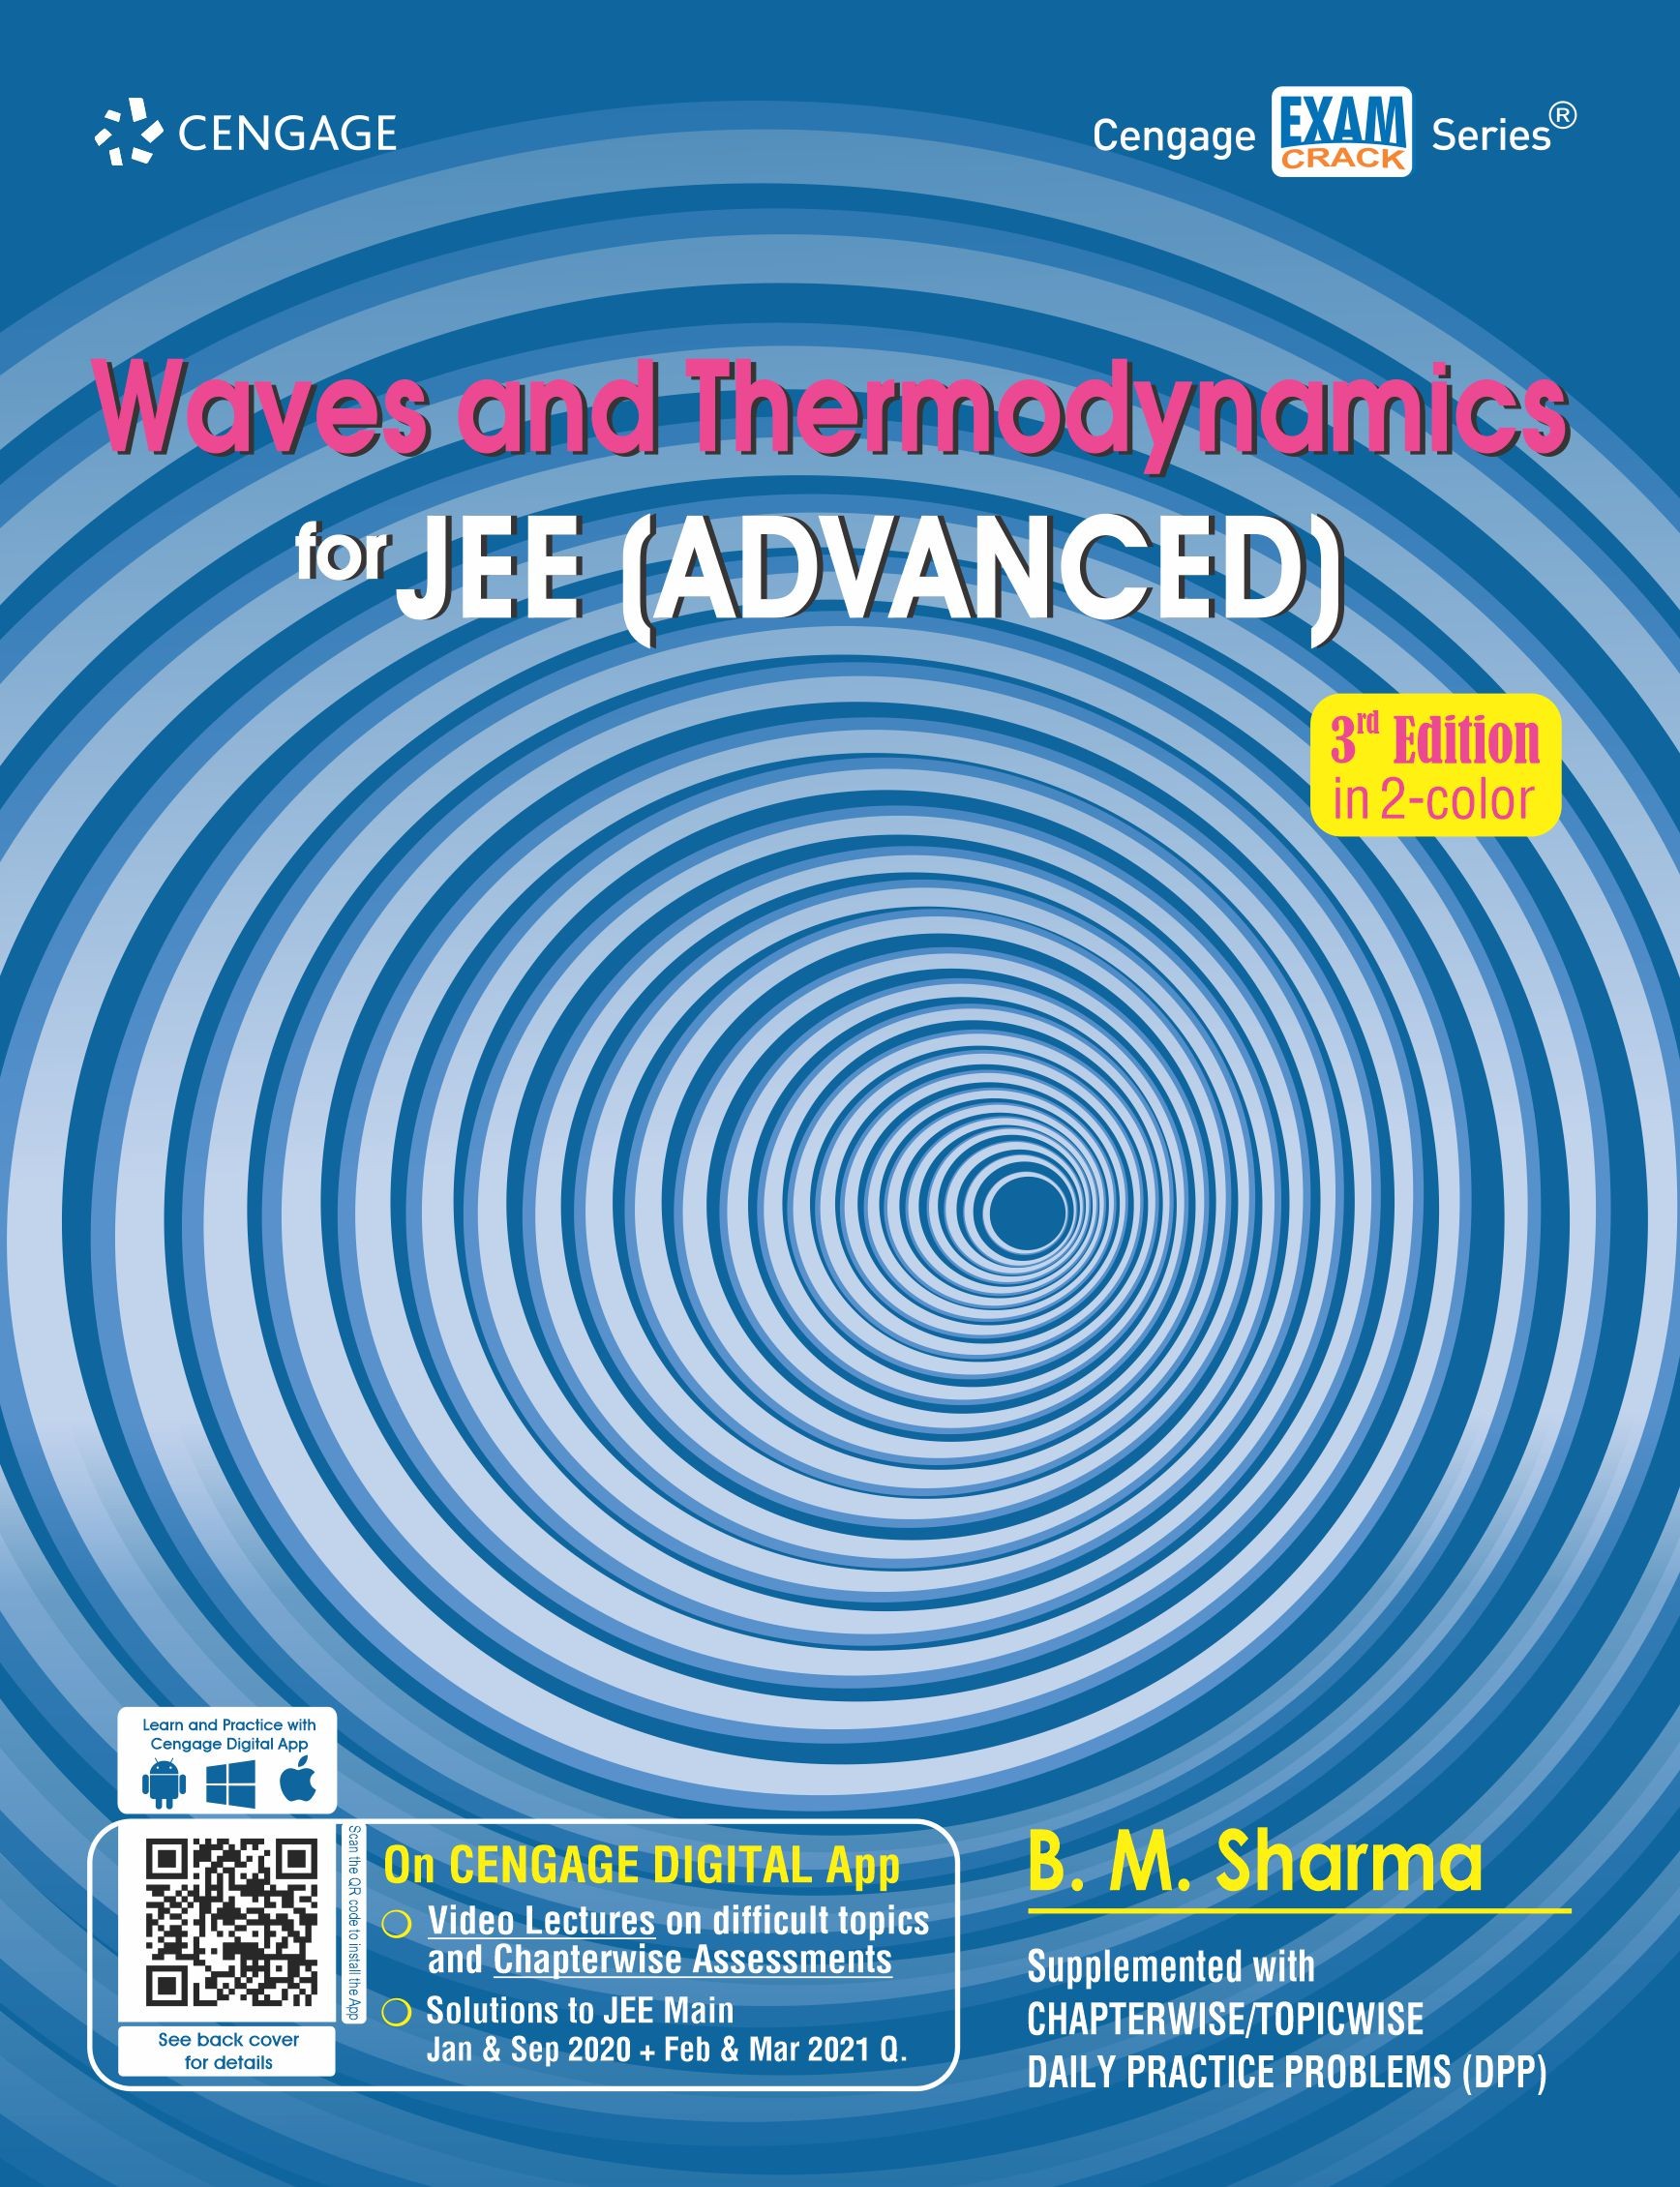 modern engineering thermodynamics pdf